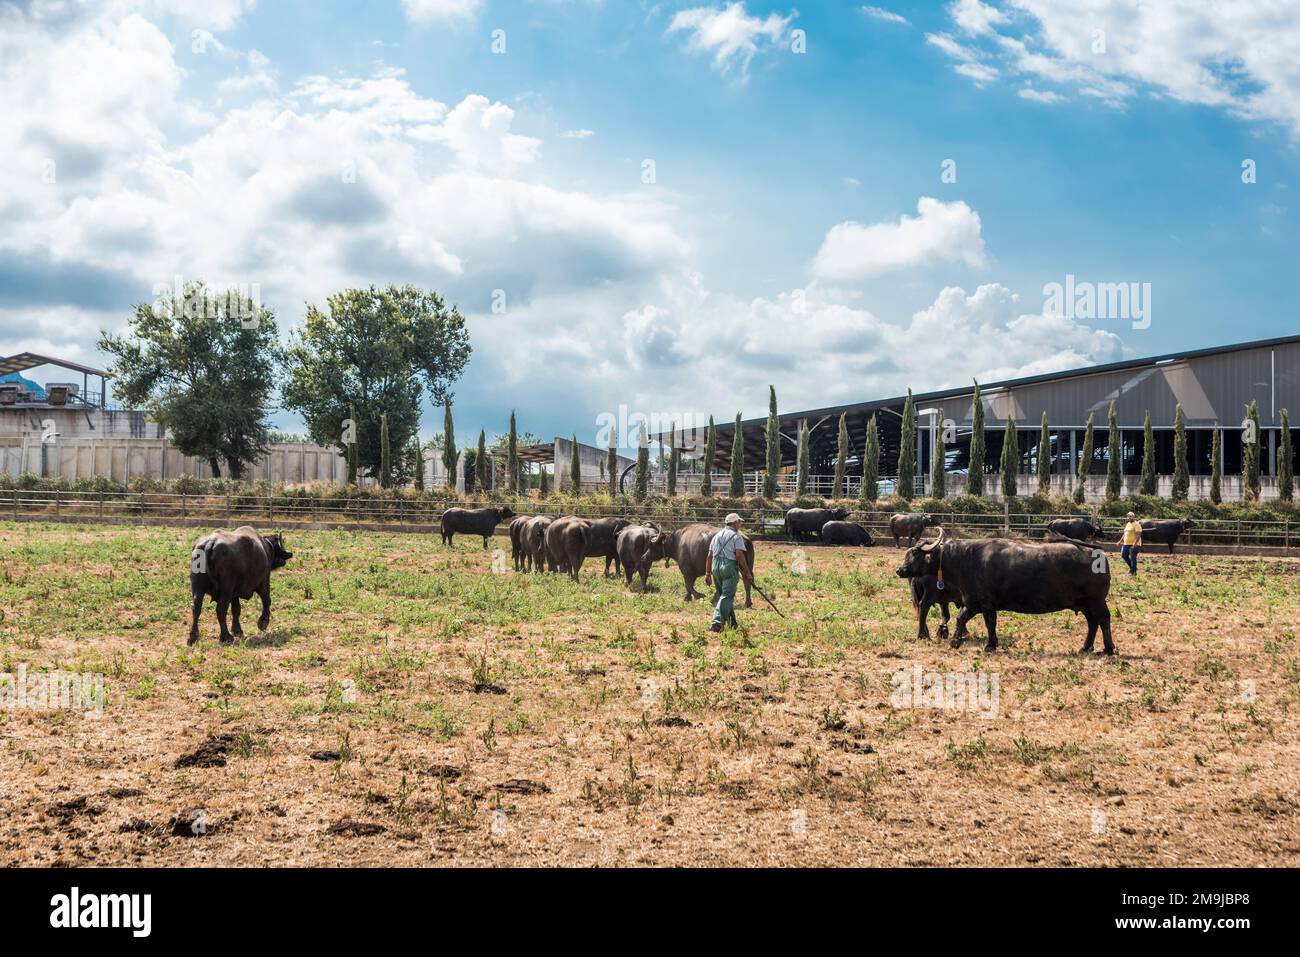 Paestum, Capaccio, Salerno, Italy - August 6, 2016: Farmer herding buffaloes used to produce Organic Mozzarella di Bufala, or Buffalo Mozzarella, Tenu Stock Photo